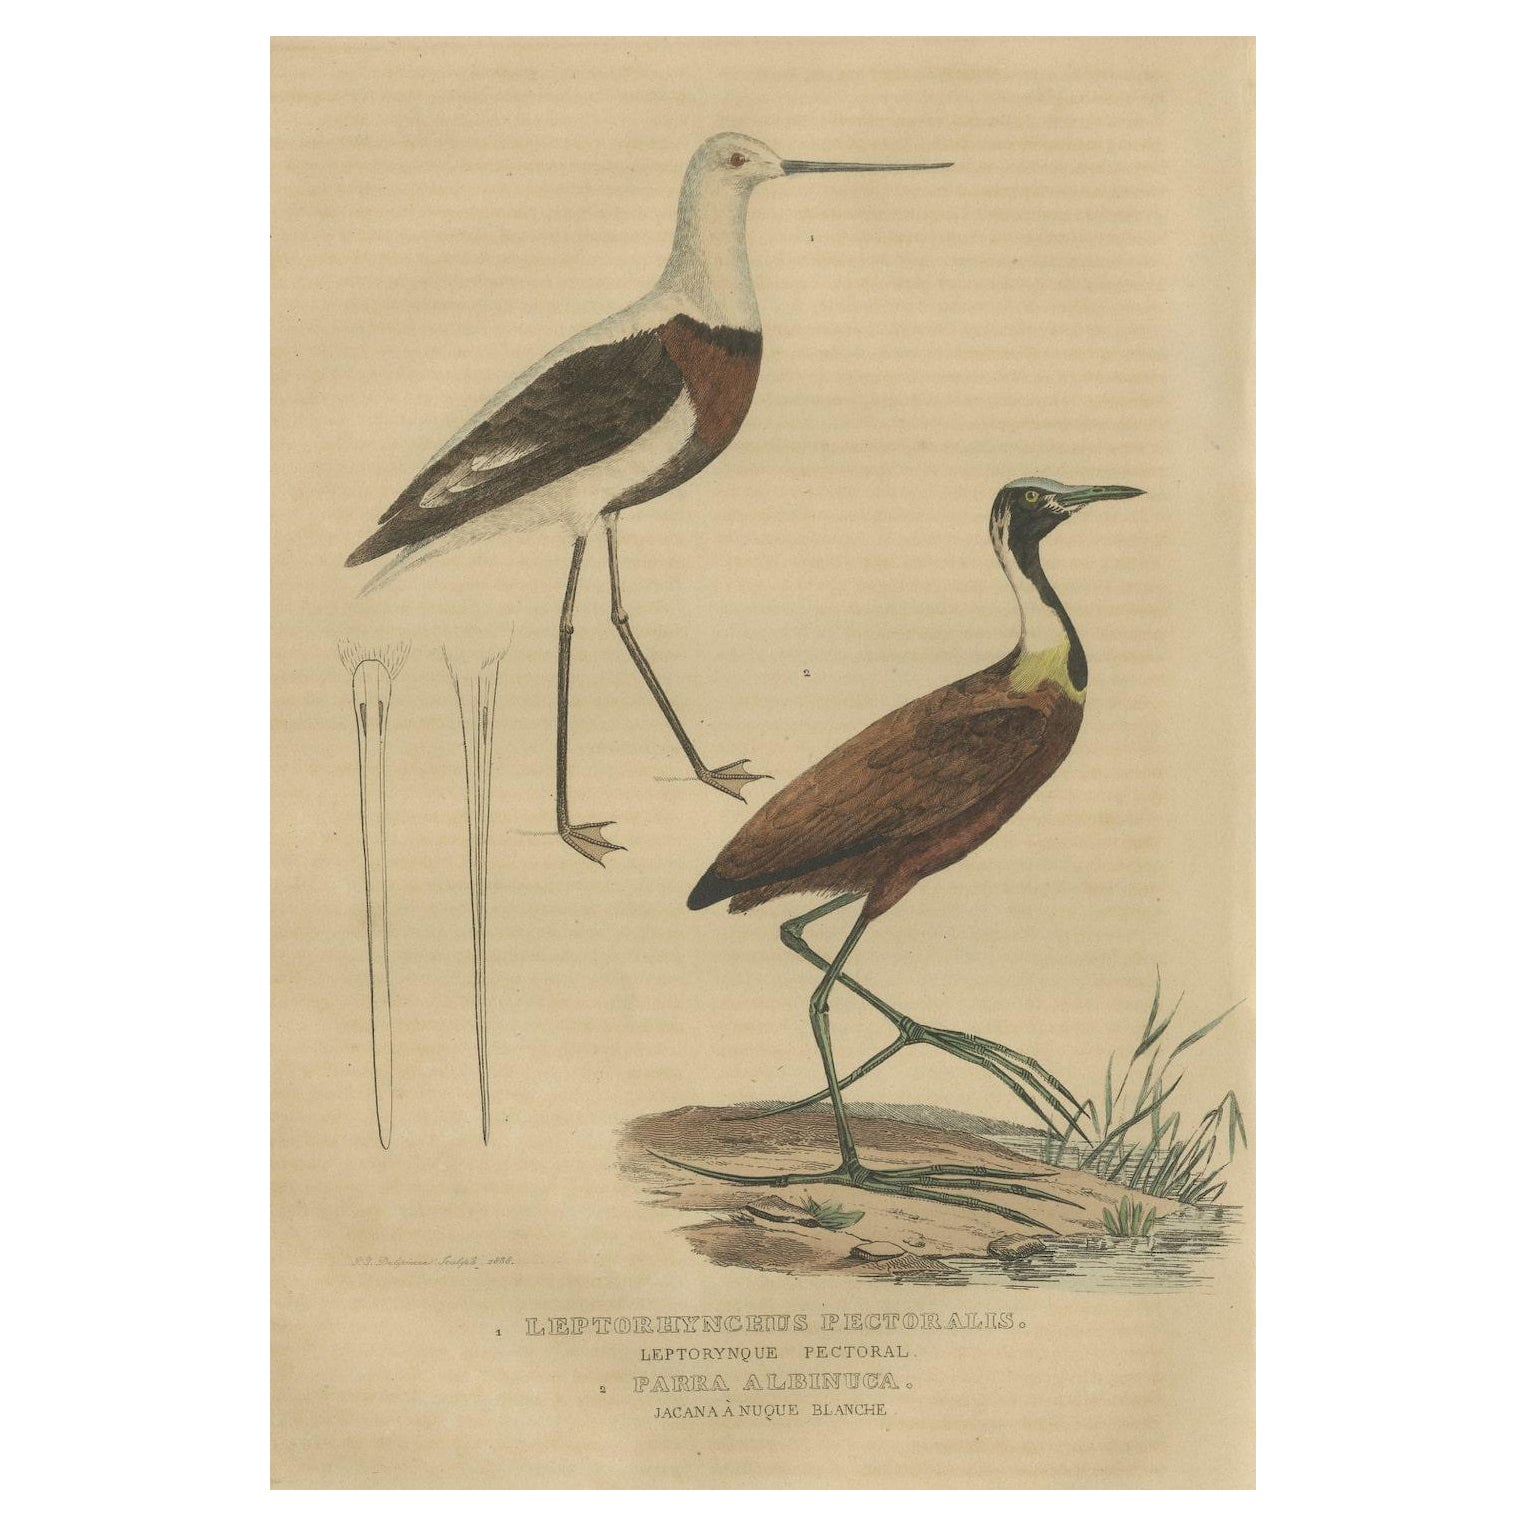 Old Hand-Colored Bird Print a Banded Stilt and a Madagascar Jacana